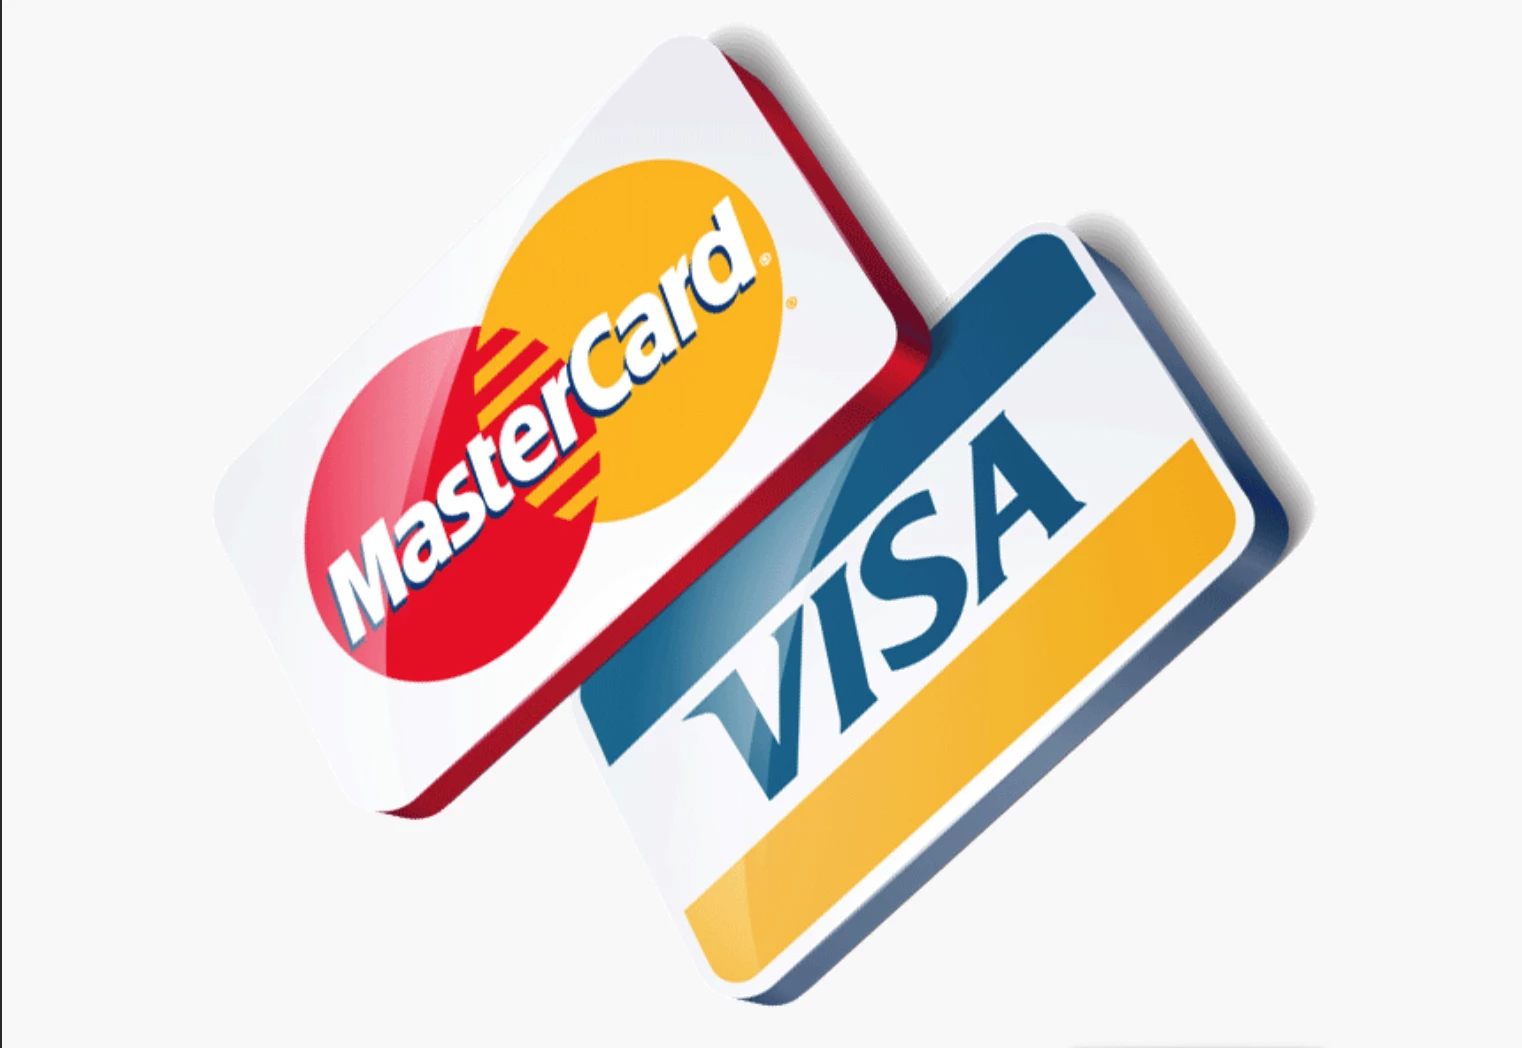 Оплата visa mastercard. Карты виза и Мастеркард. Значки карт банковских. Значок оплаты банковскими картами. Кары виза и мастеркарт.